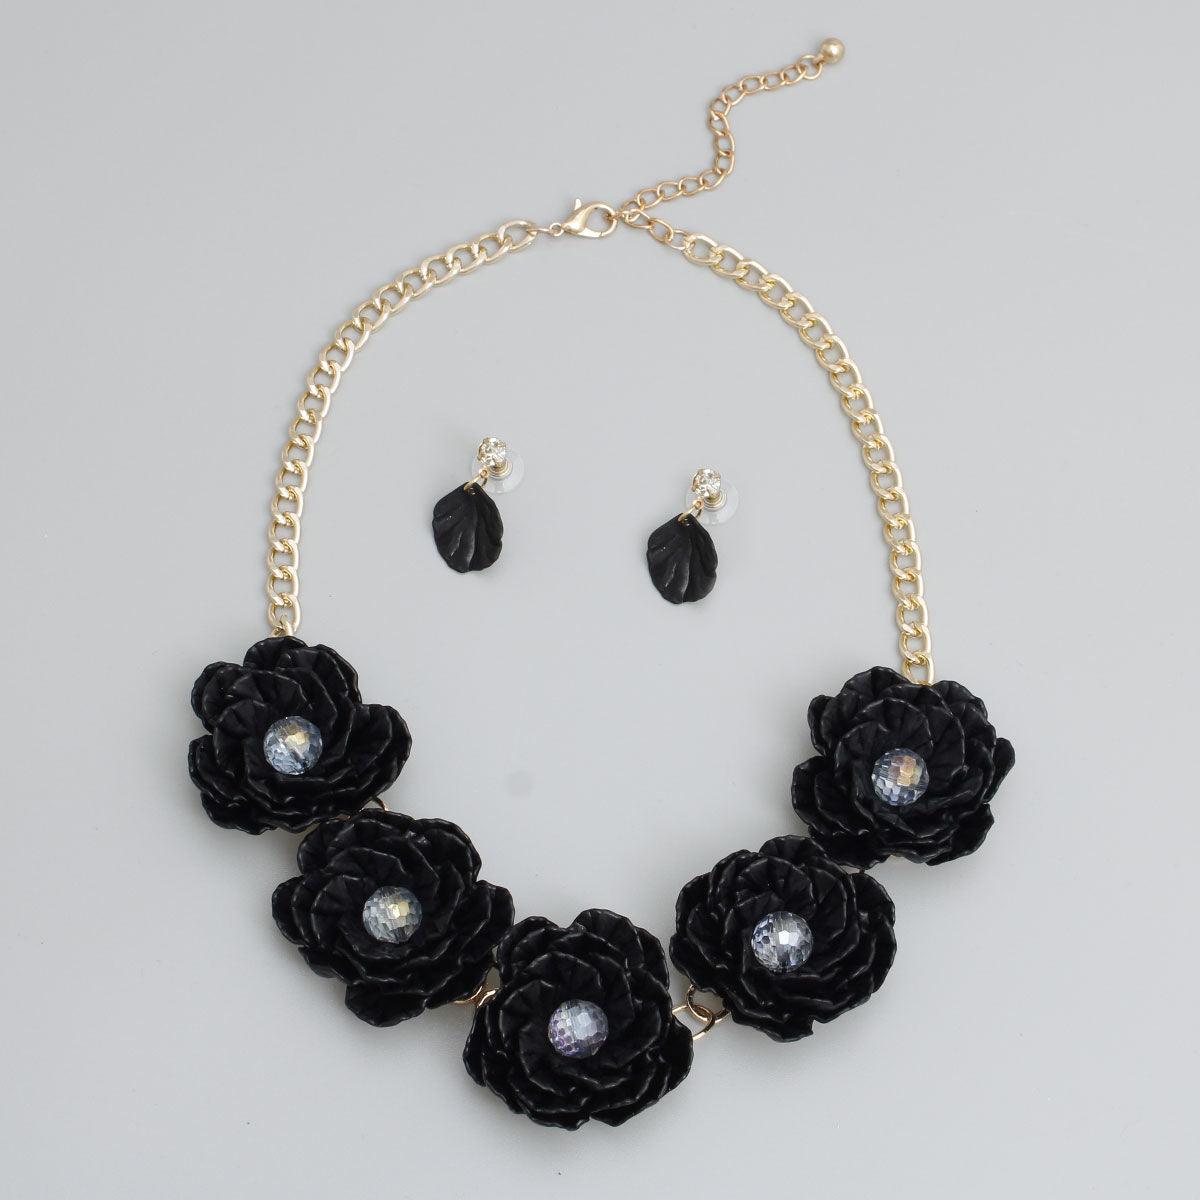 Stunning Black Flower Necklace Set - Enchanting Look